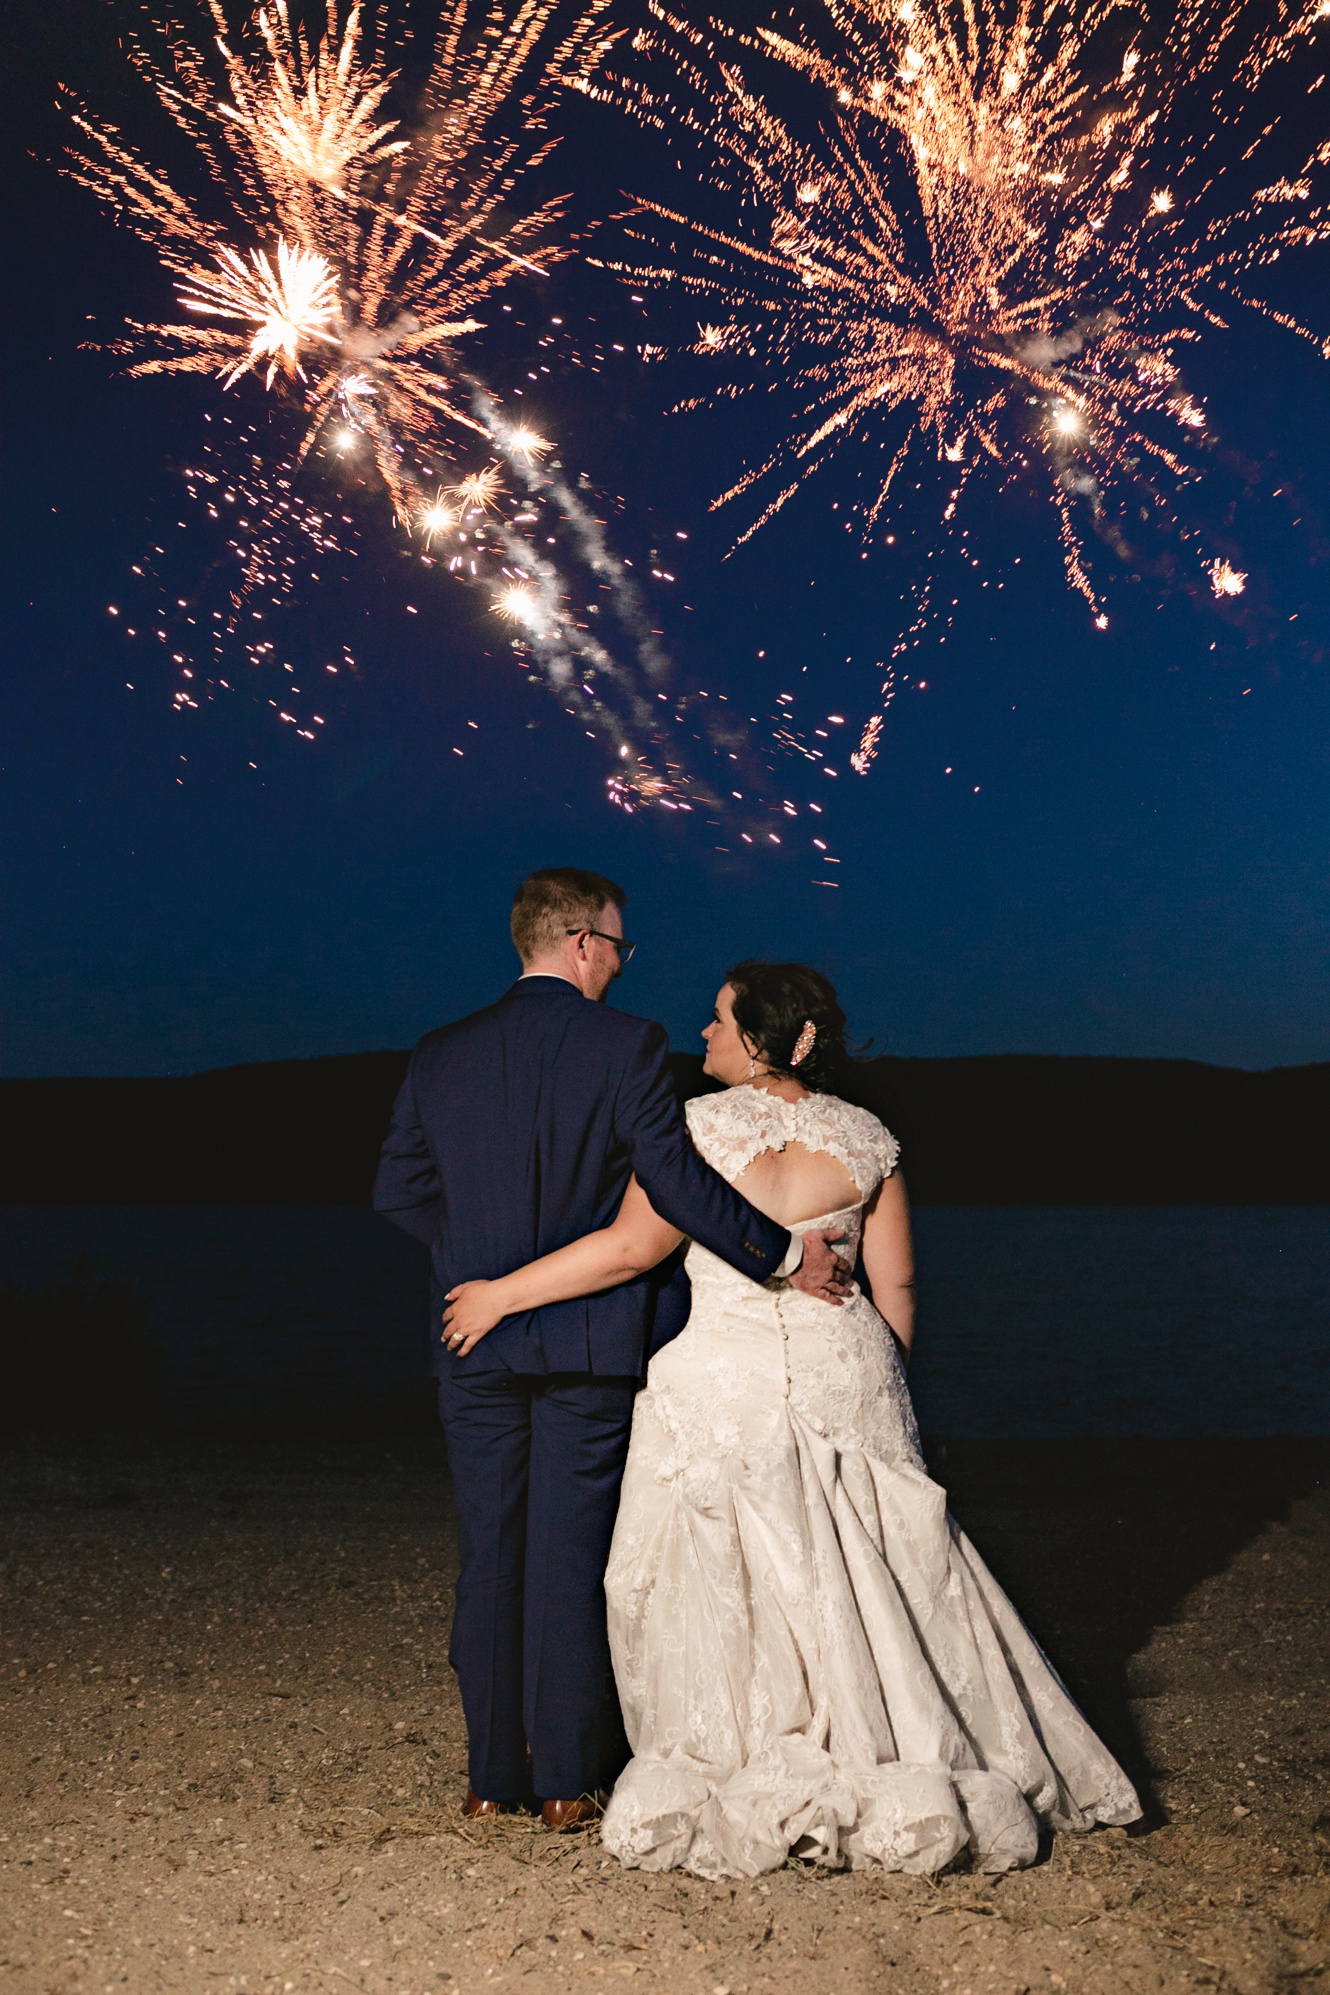 Wedding fireworks photo